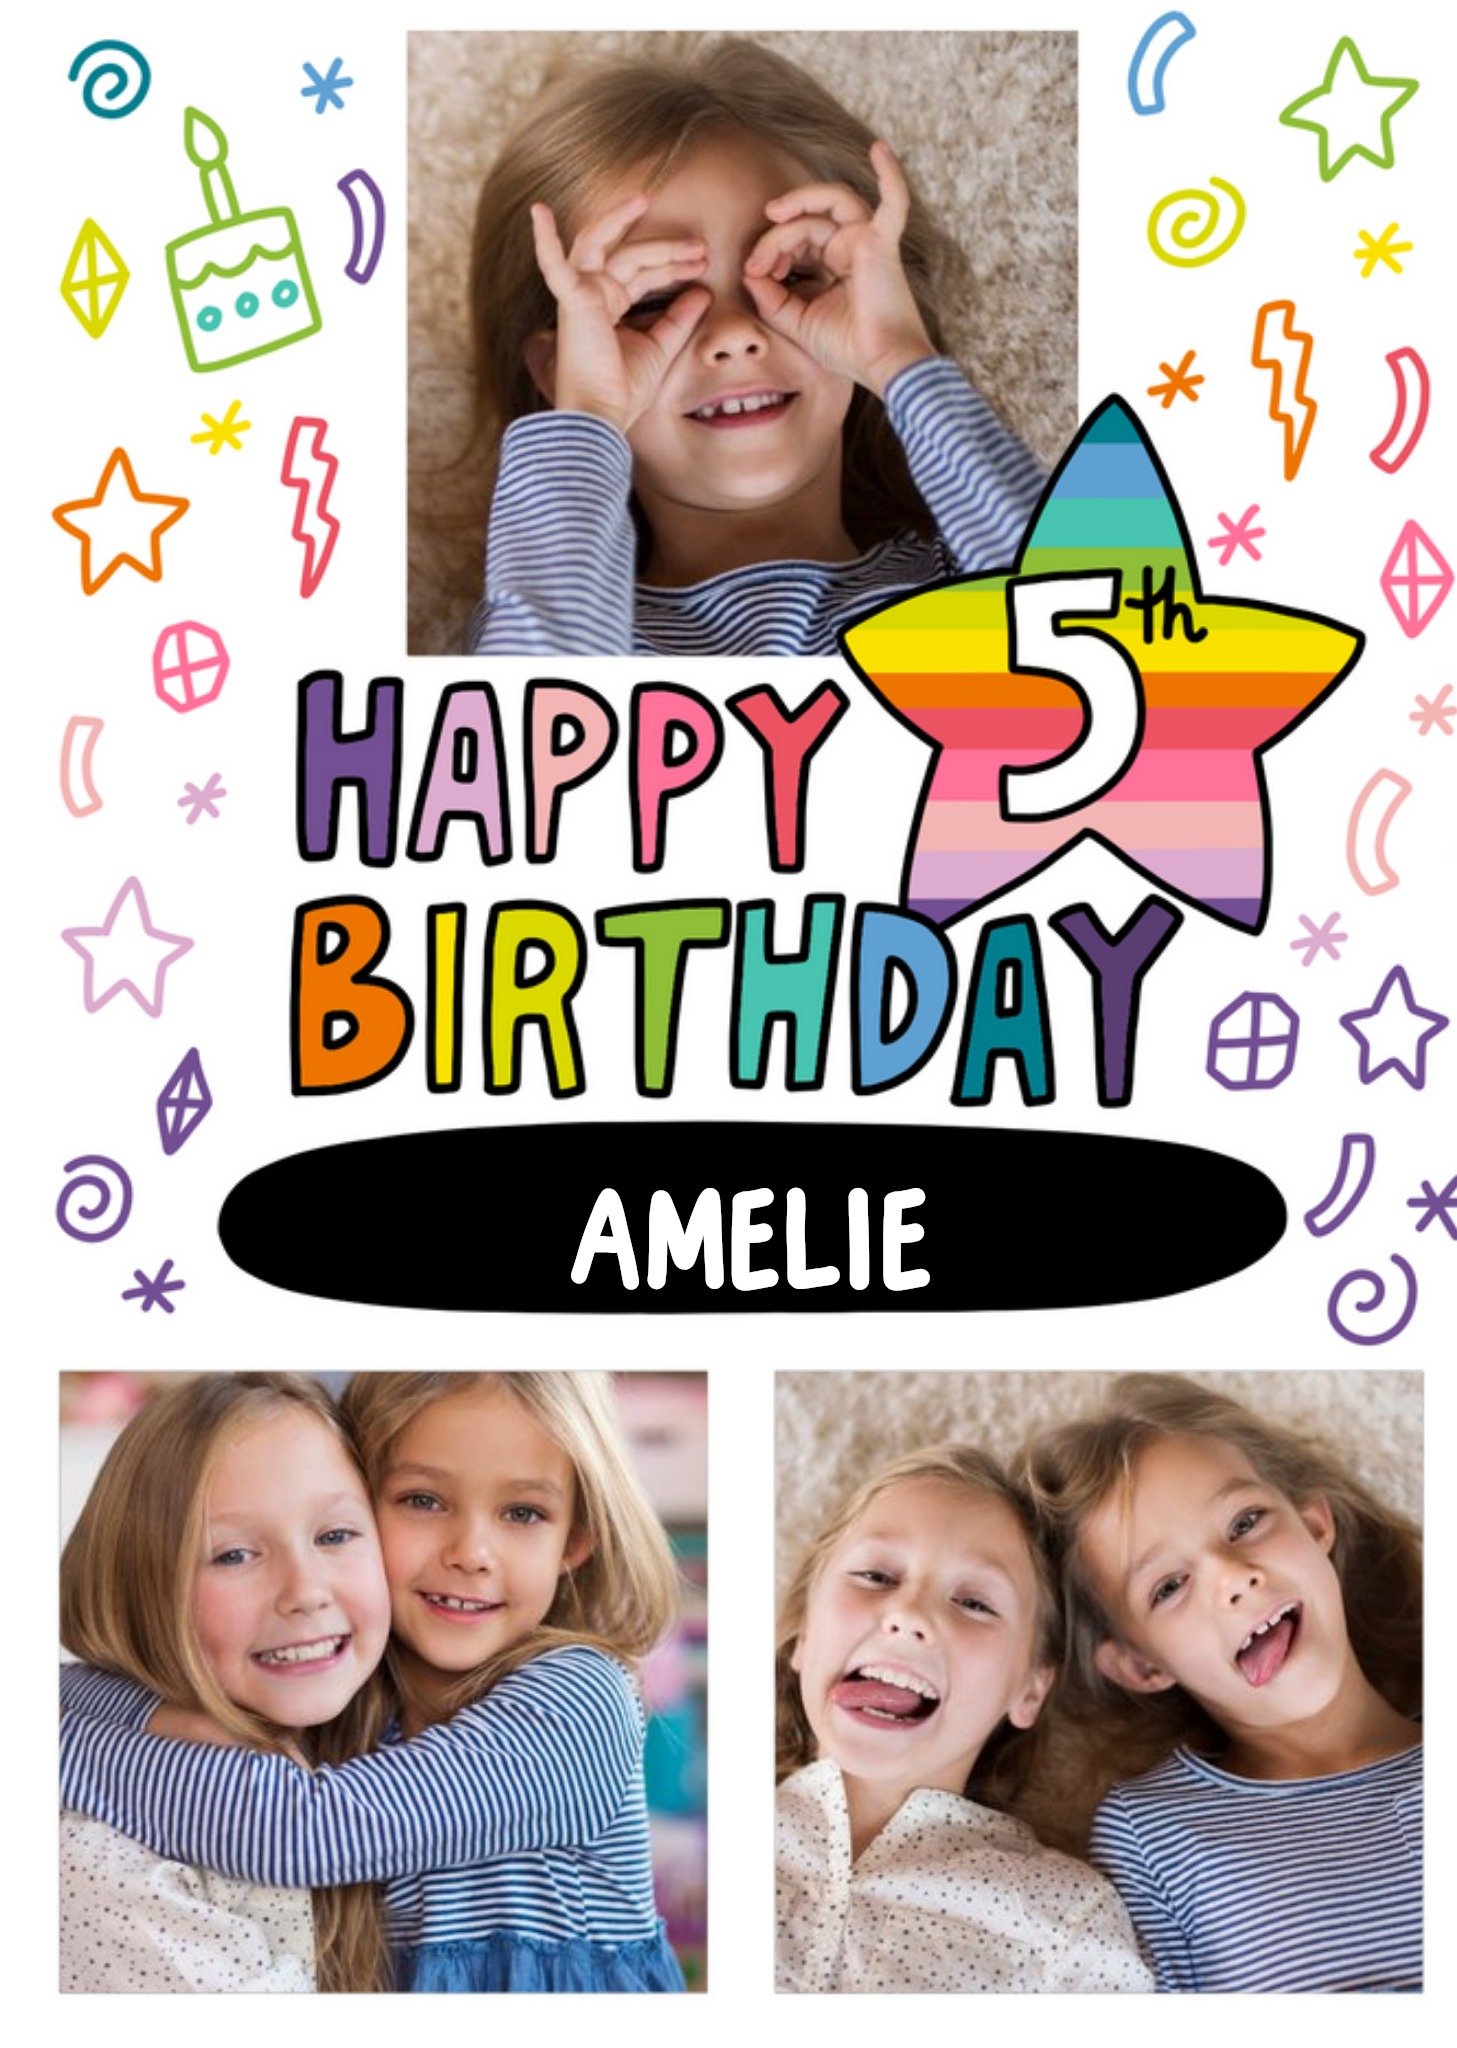 Moonpig Angela Chick Bright Personalised Photo Upload 5th Birthday Card Ecard